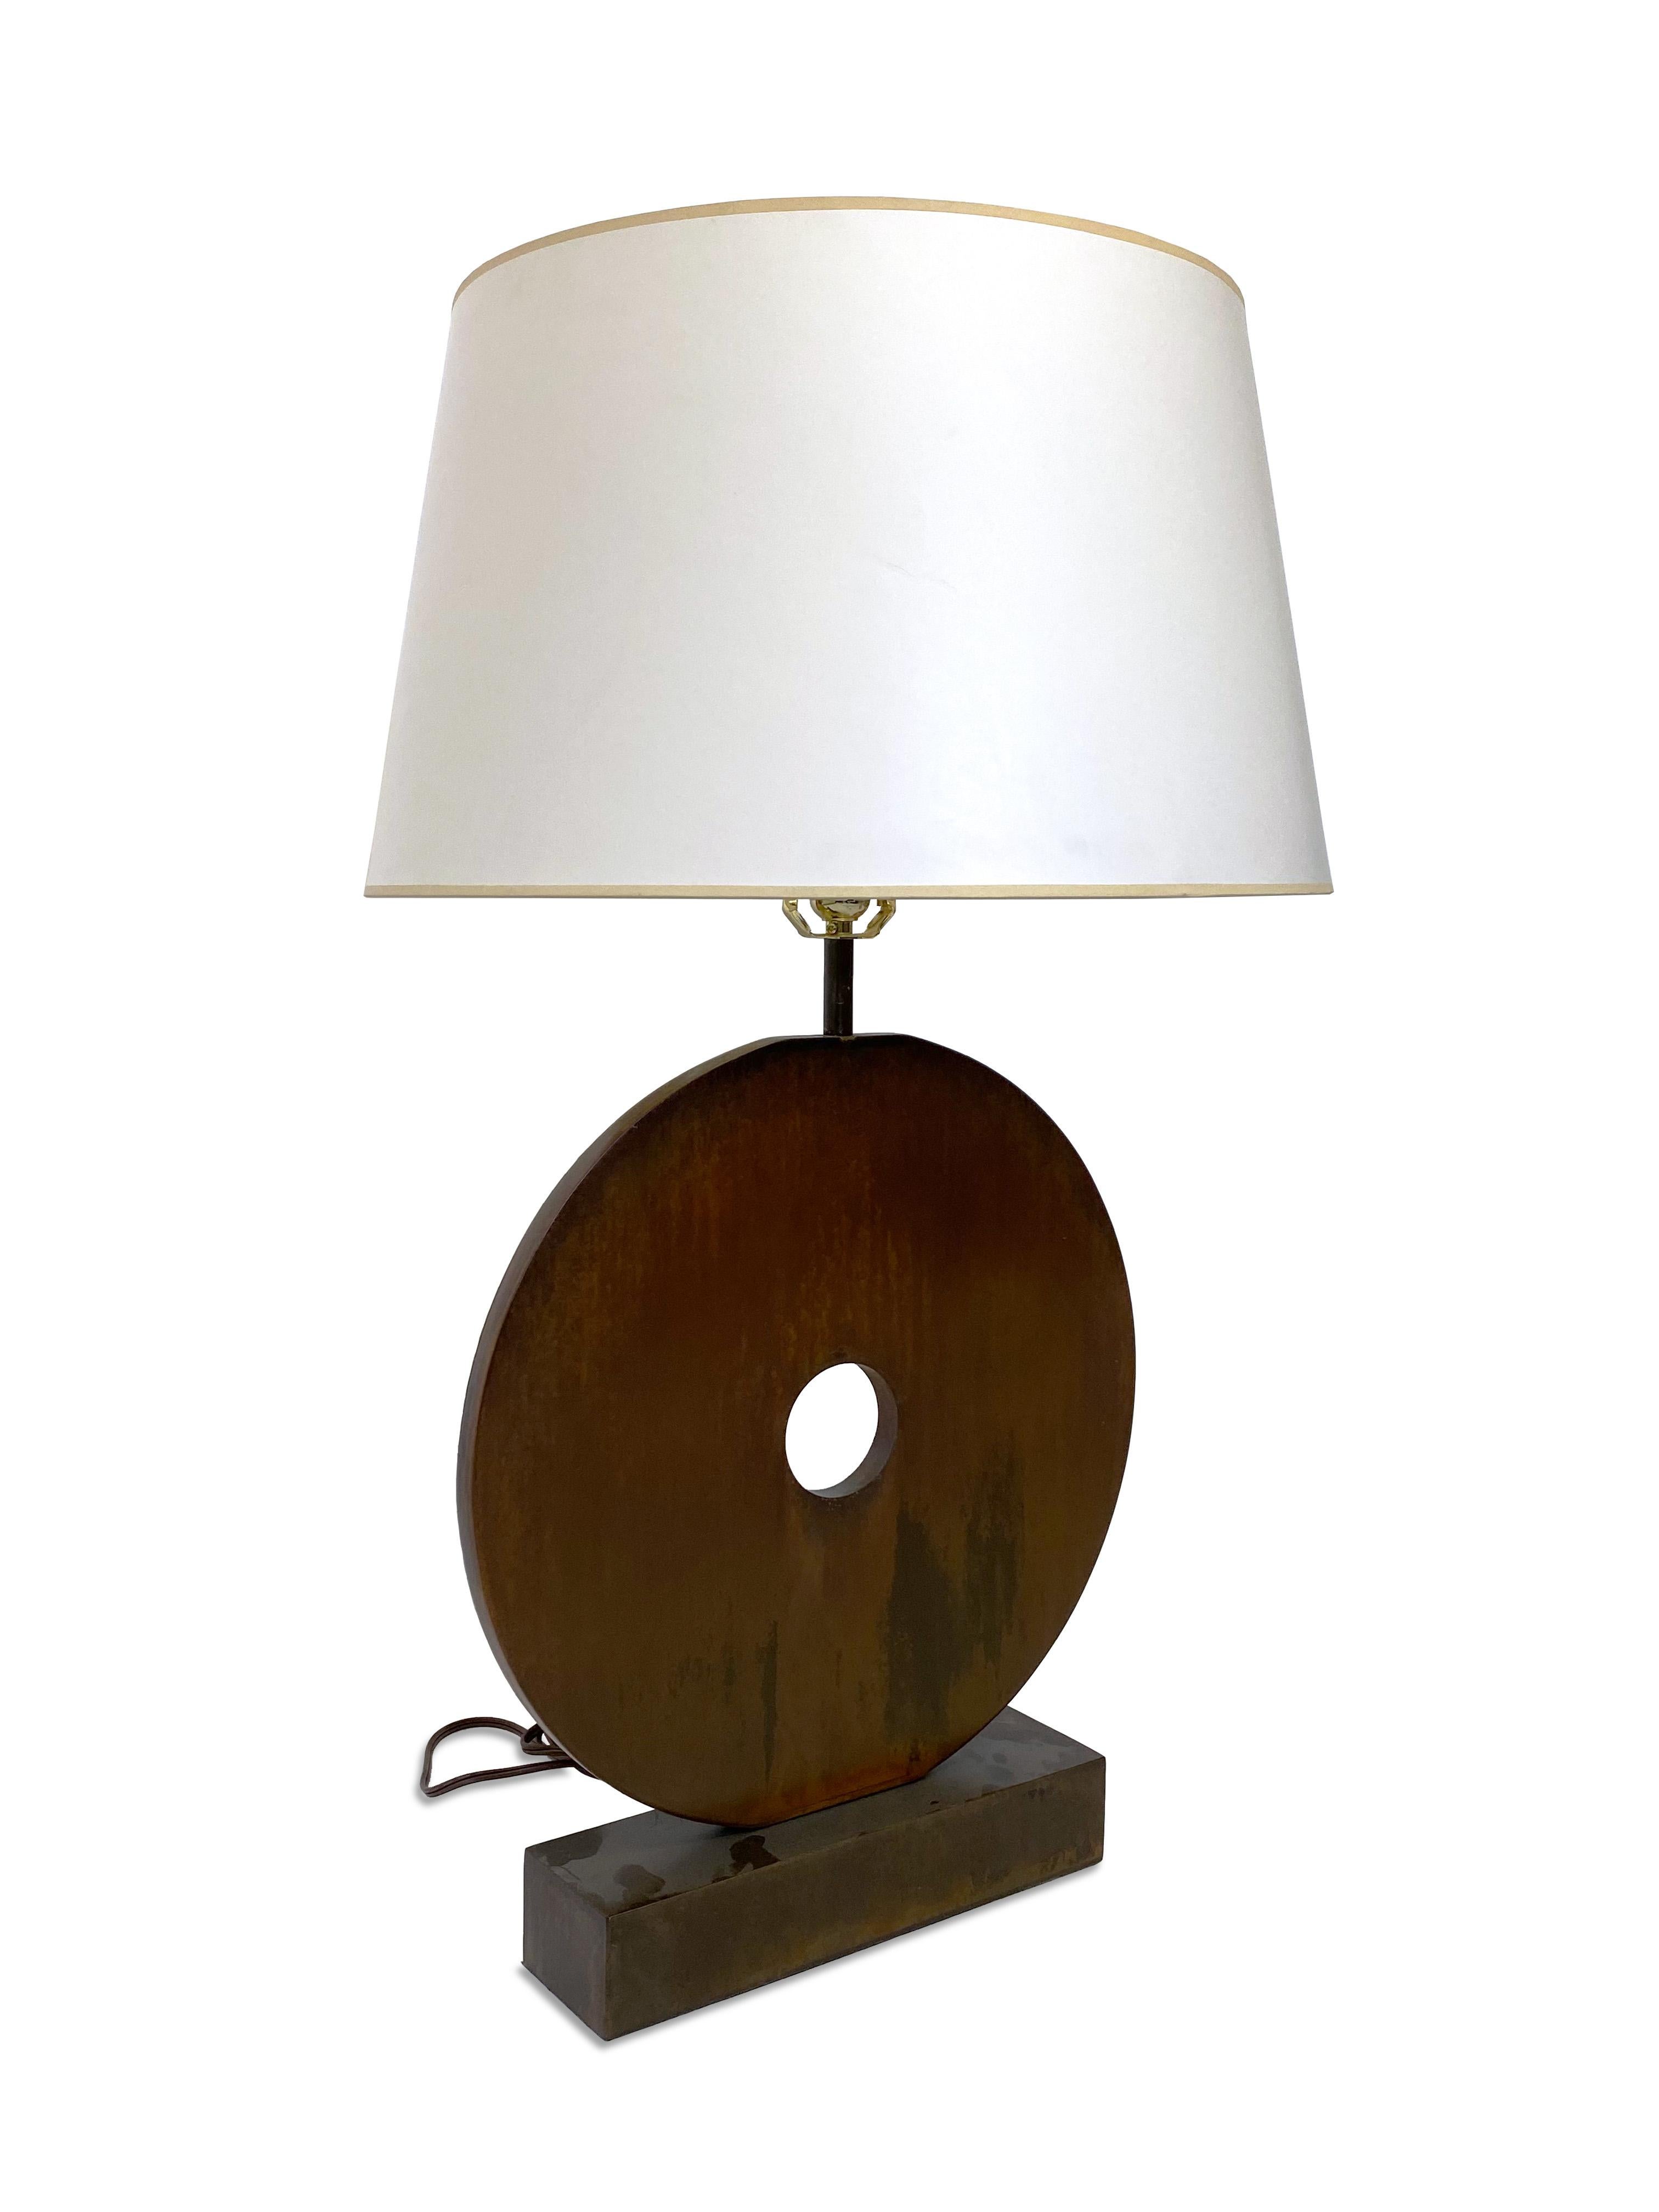 American Circular Iron Lamp Designed by Juan Montoya